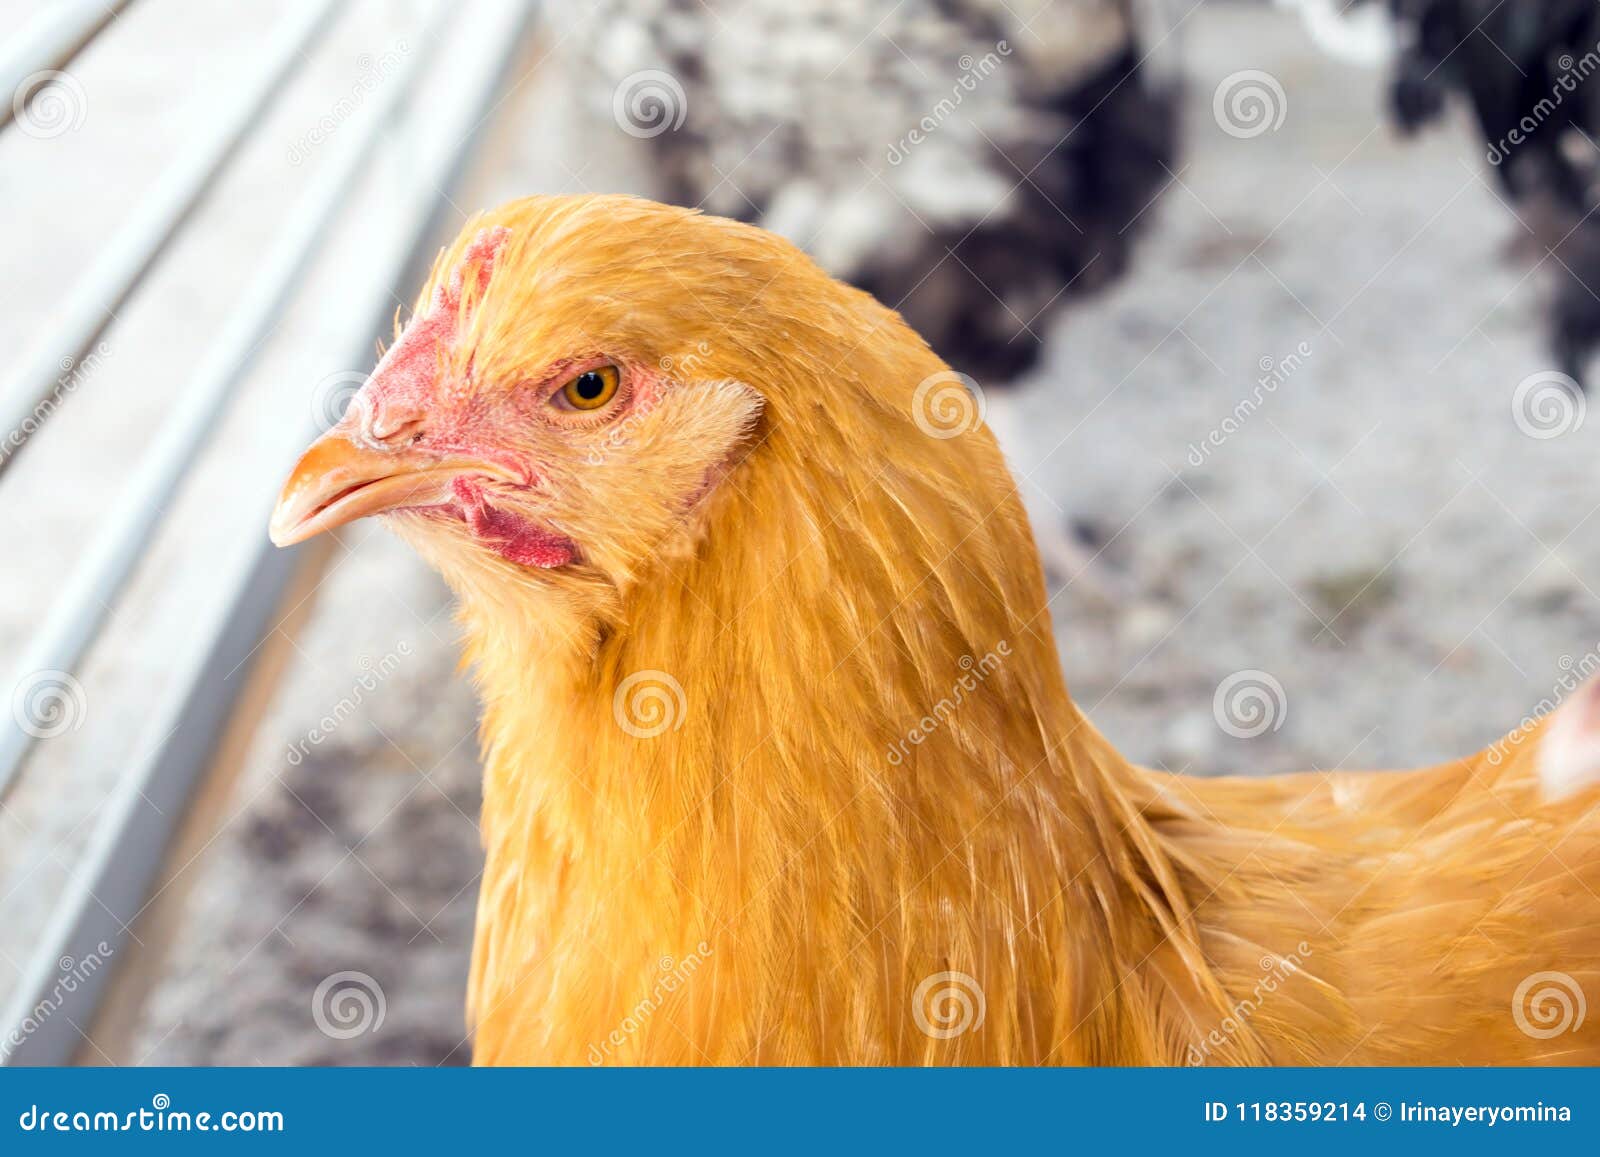 Курица желтого цвета. Золотая курица. Порода курей золотистый жёлтые. Курица с золотыми яйцами.